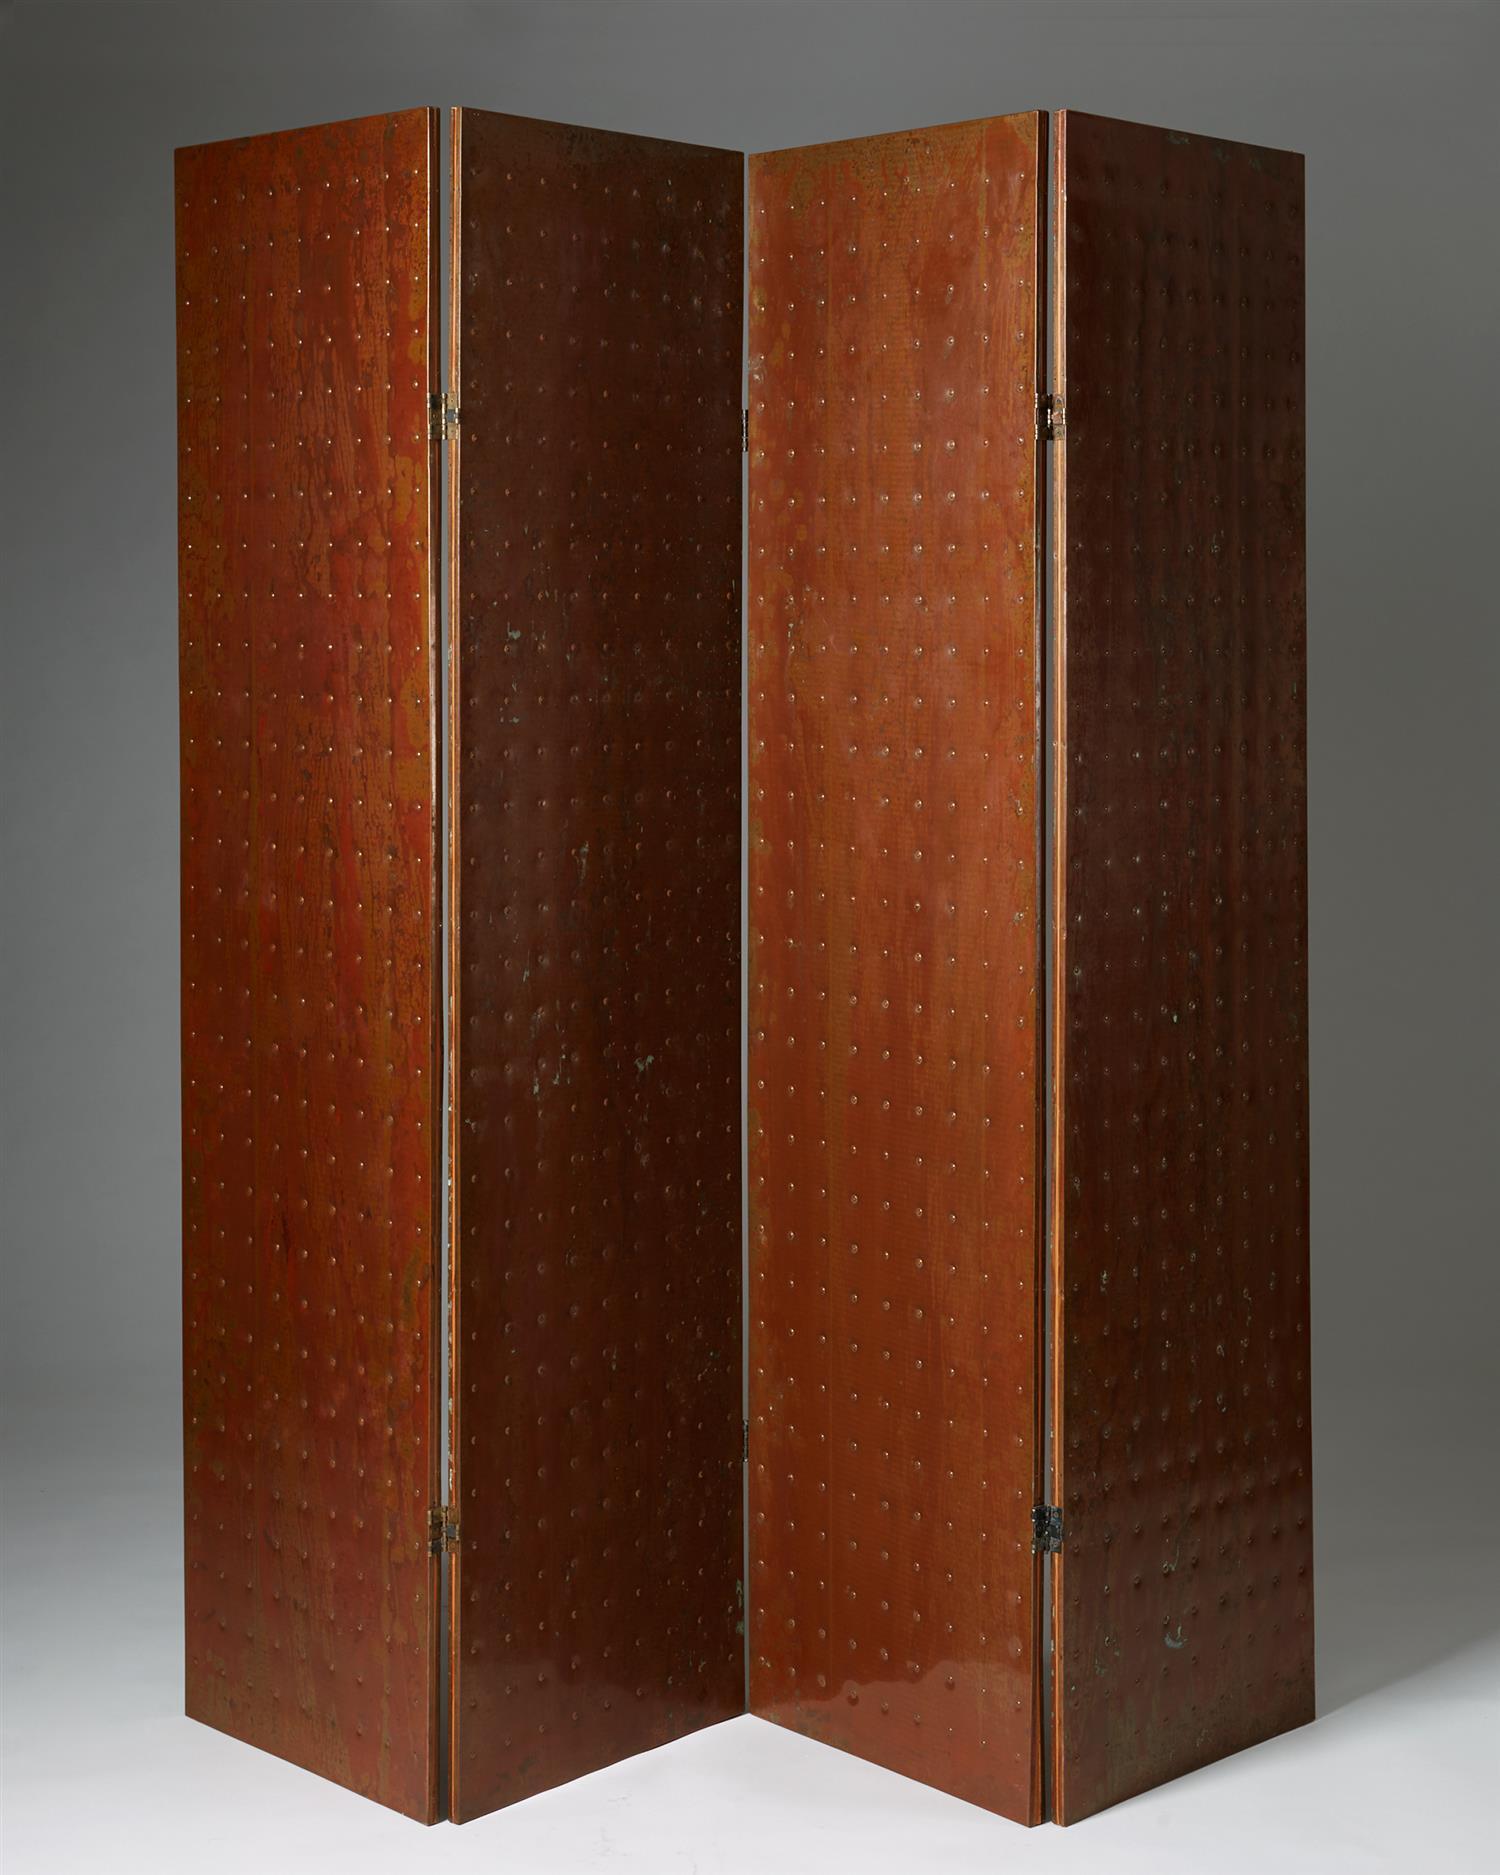 Copper clad wood.

Number 36/100.

Measures: H 188 cm/ 6' 2”
Total length 182 cm/ 6' 3 1/2